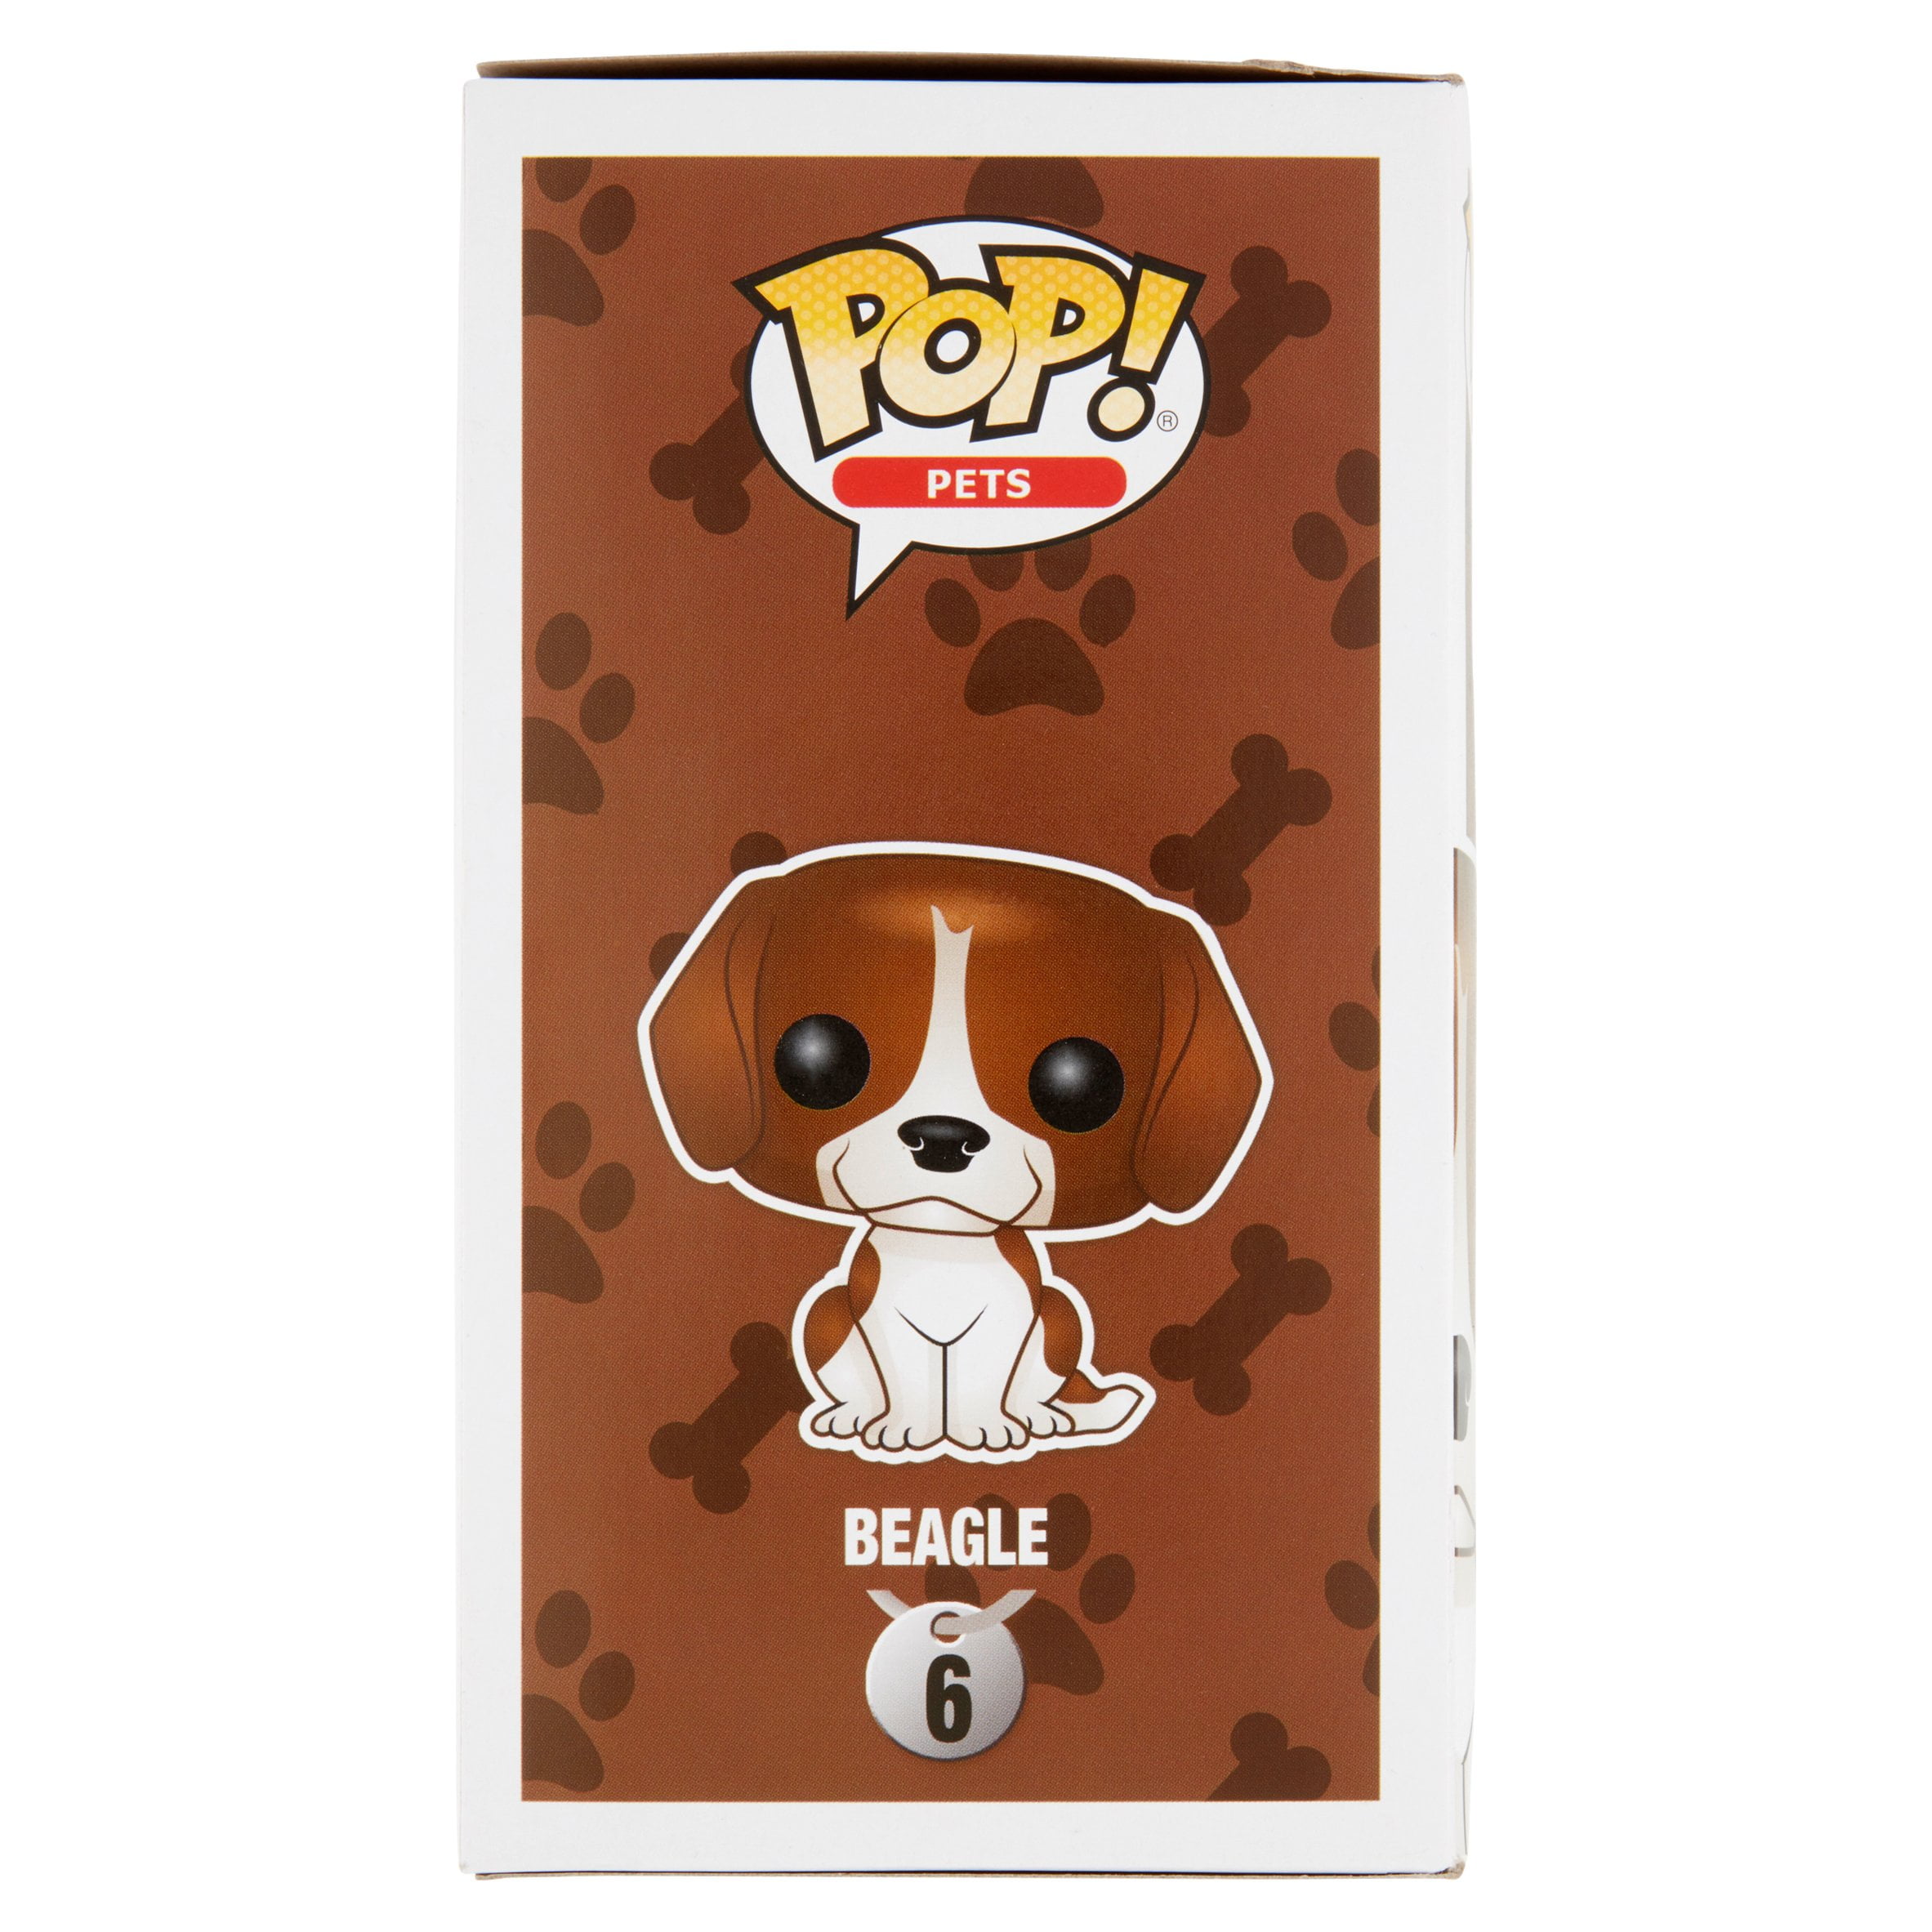 Beagle Action Figure 11057 Accessory Toys /& Games Miscellaneous Pets Funko POP Pets